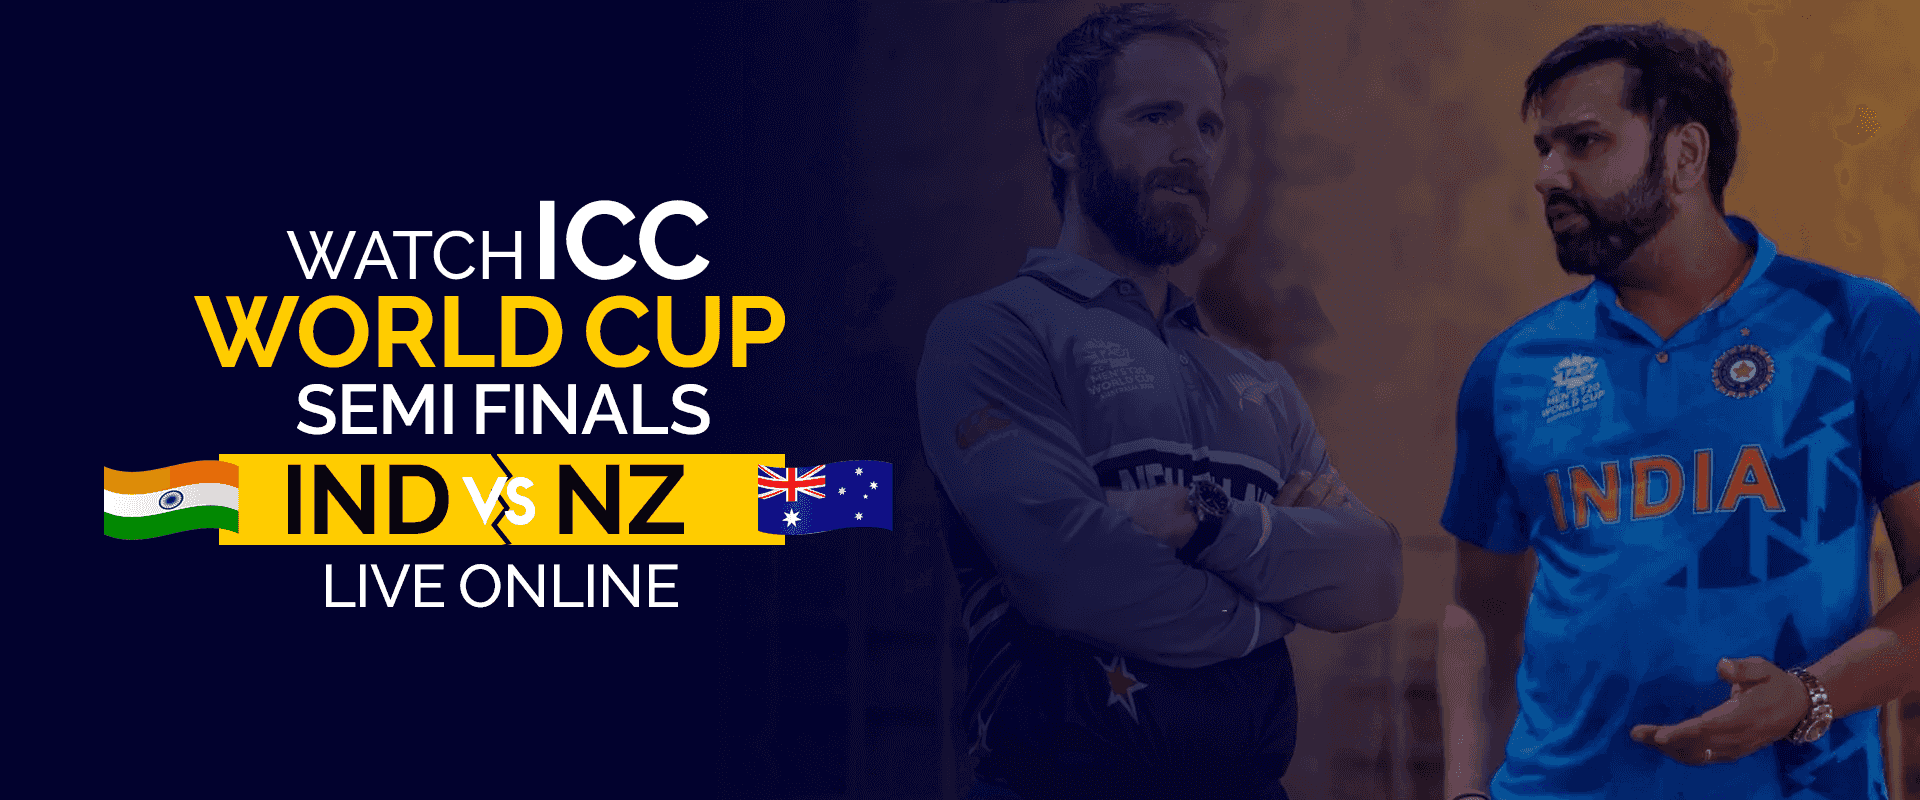 Se ICC World Cup Semi-Finals IND vs NZ live online